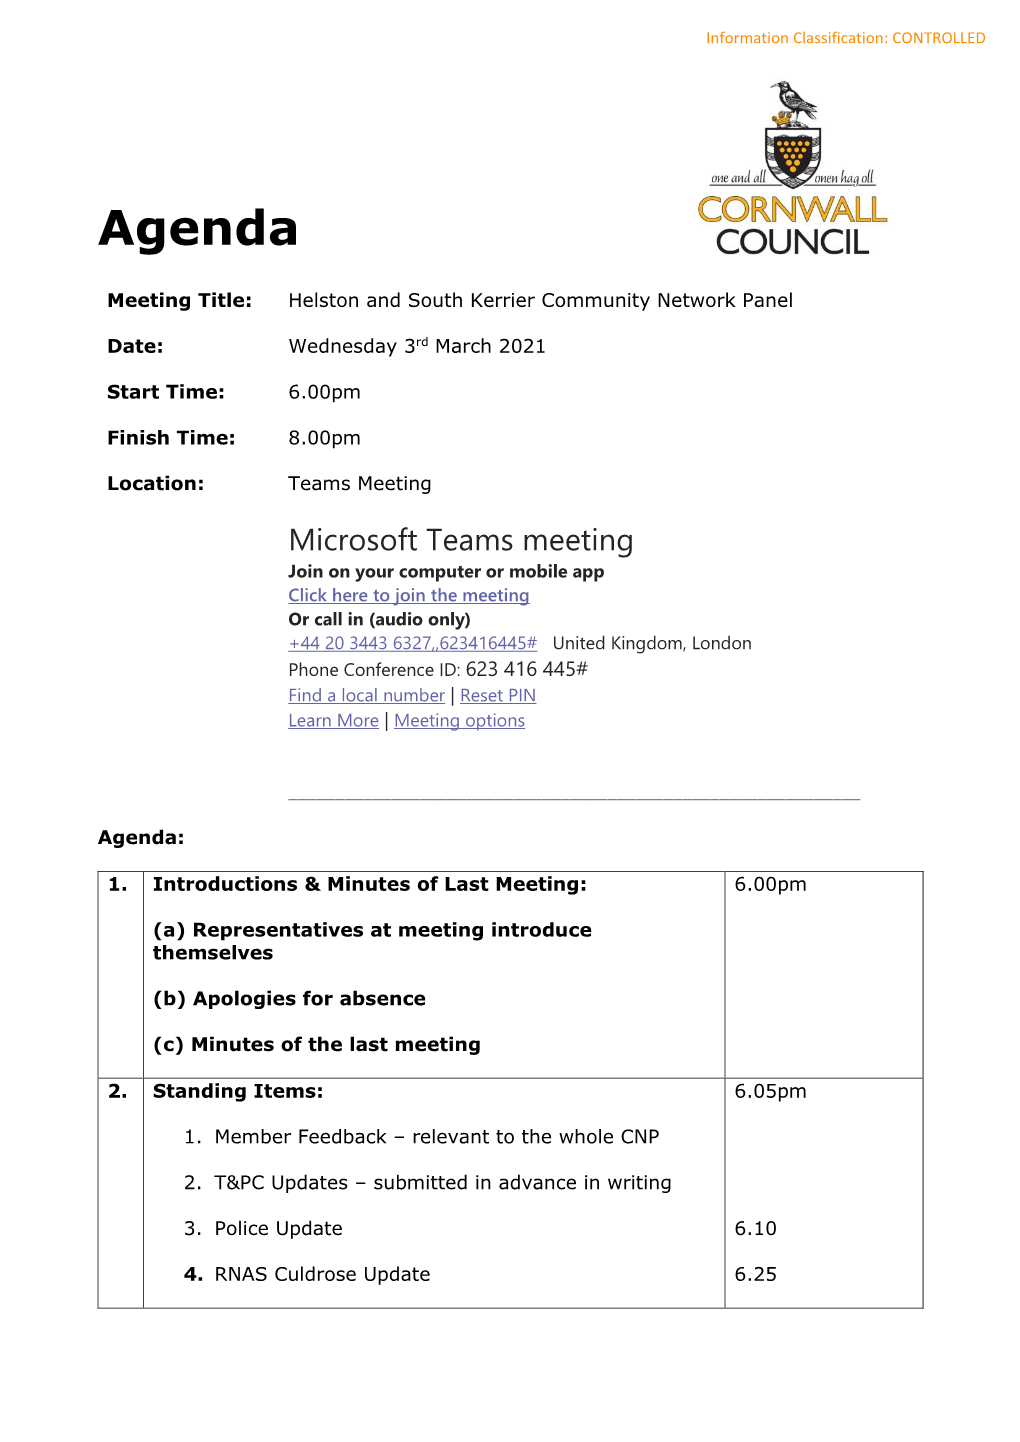 Helston & South Kerrier CNP 3 March 2021 Agenda